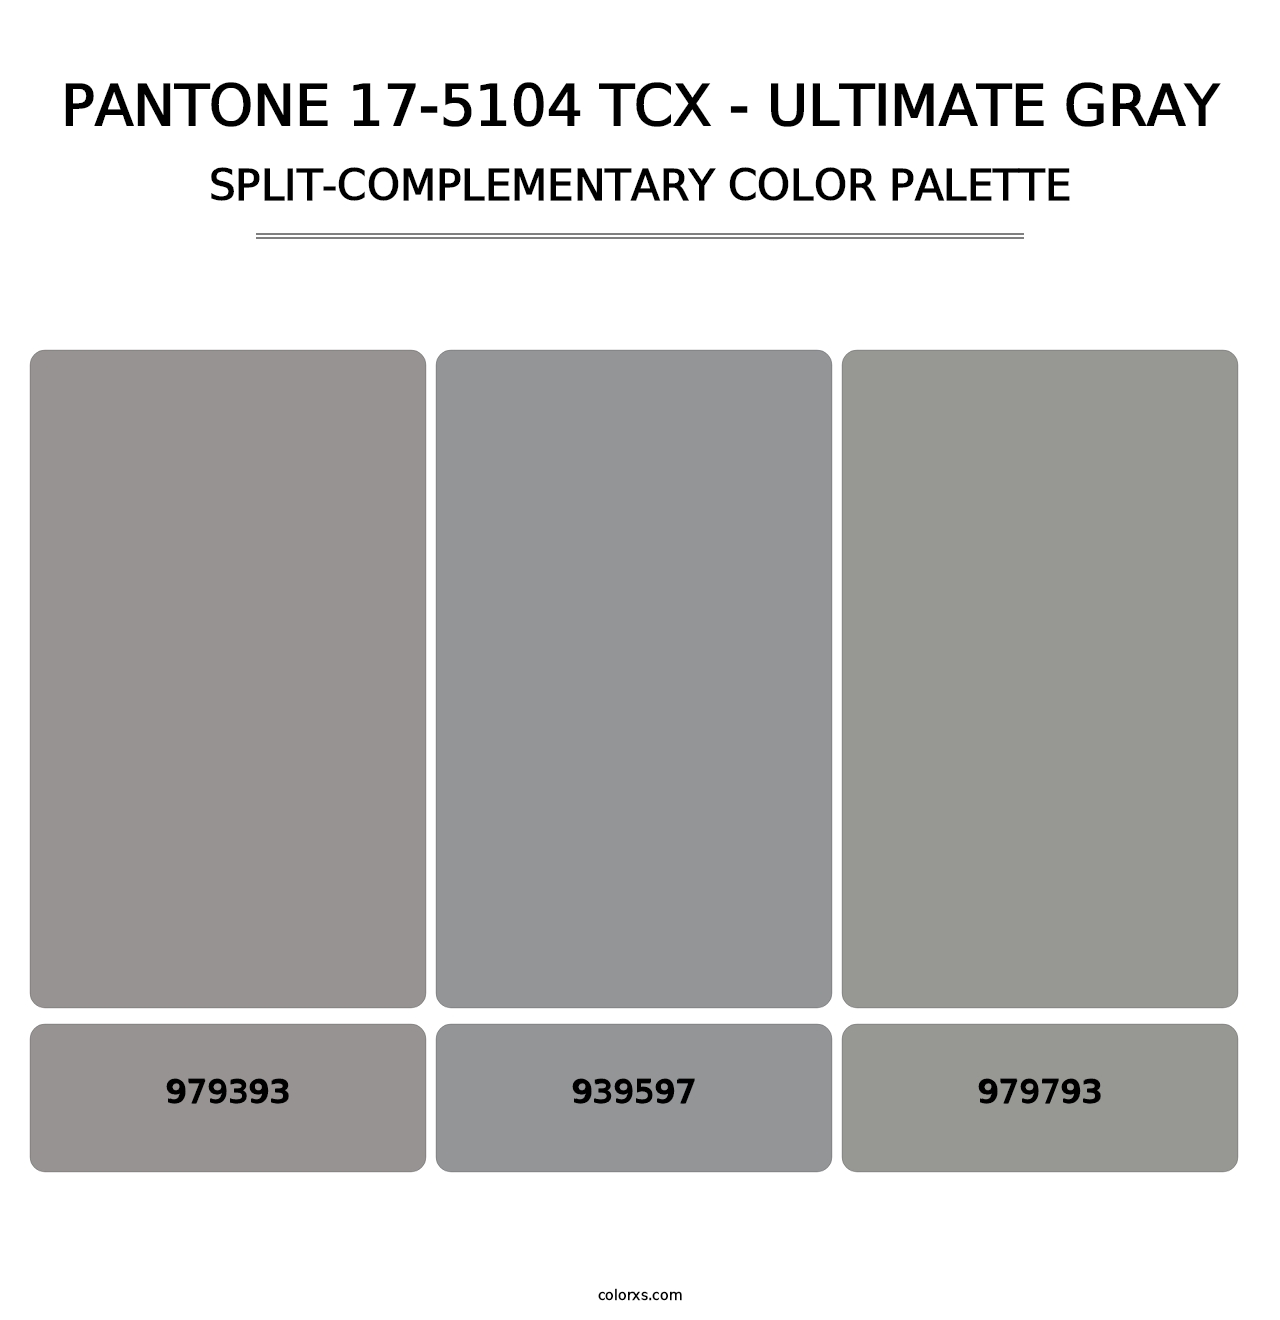 PANTONE 17-5104 TCX - Ultimate Gray - Split-Complementary Color Palette